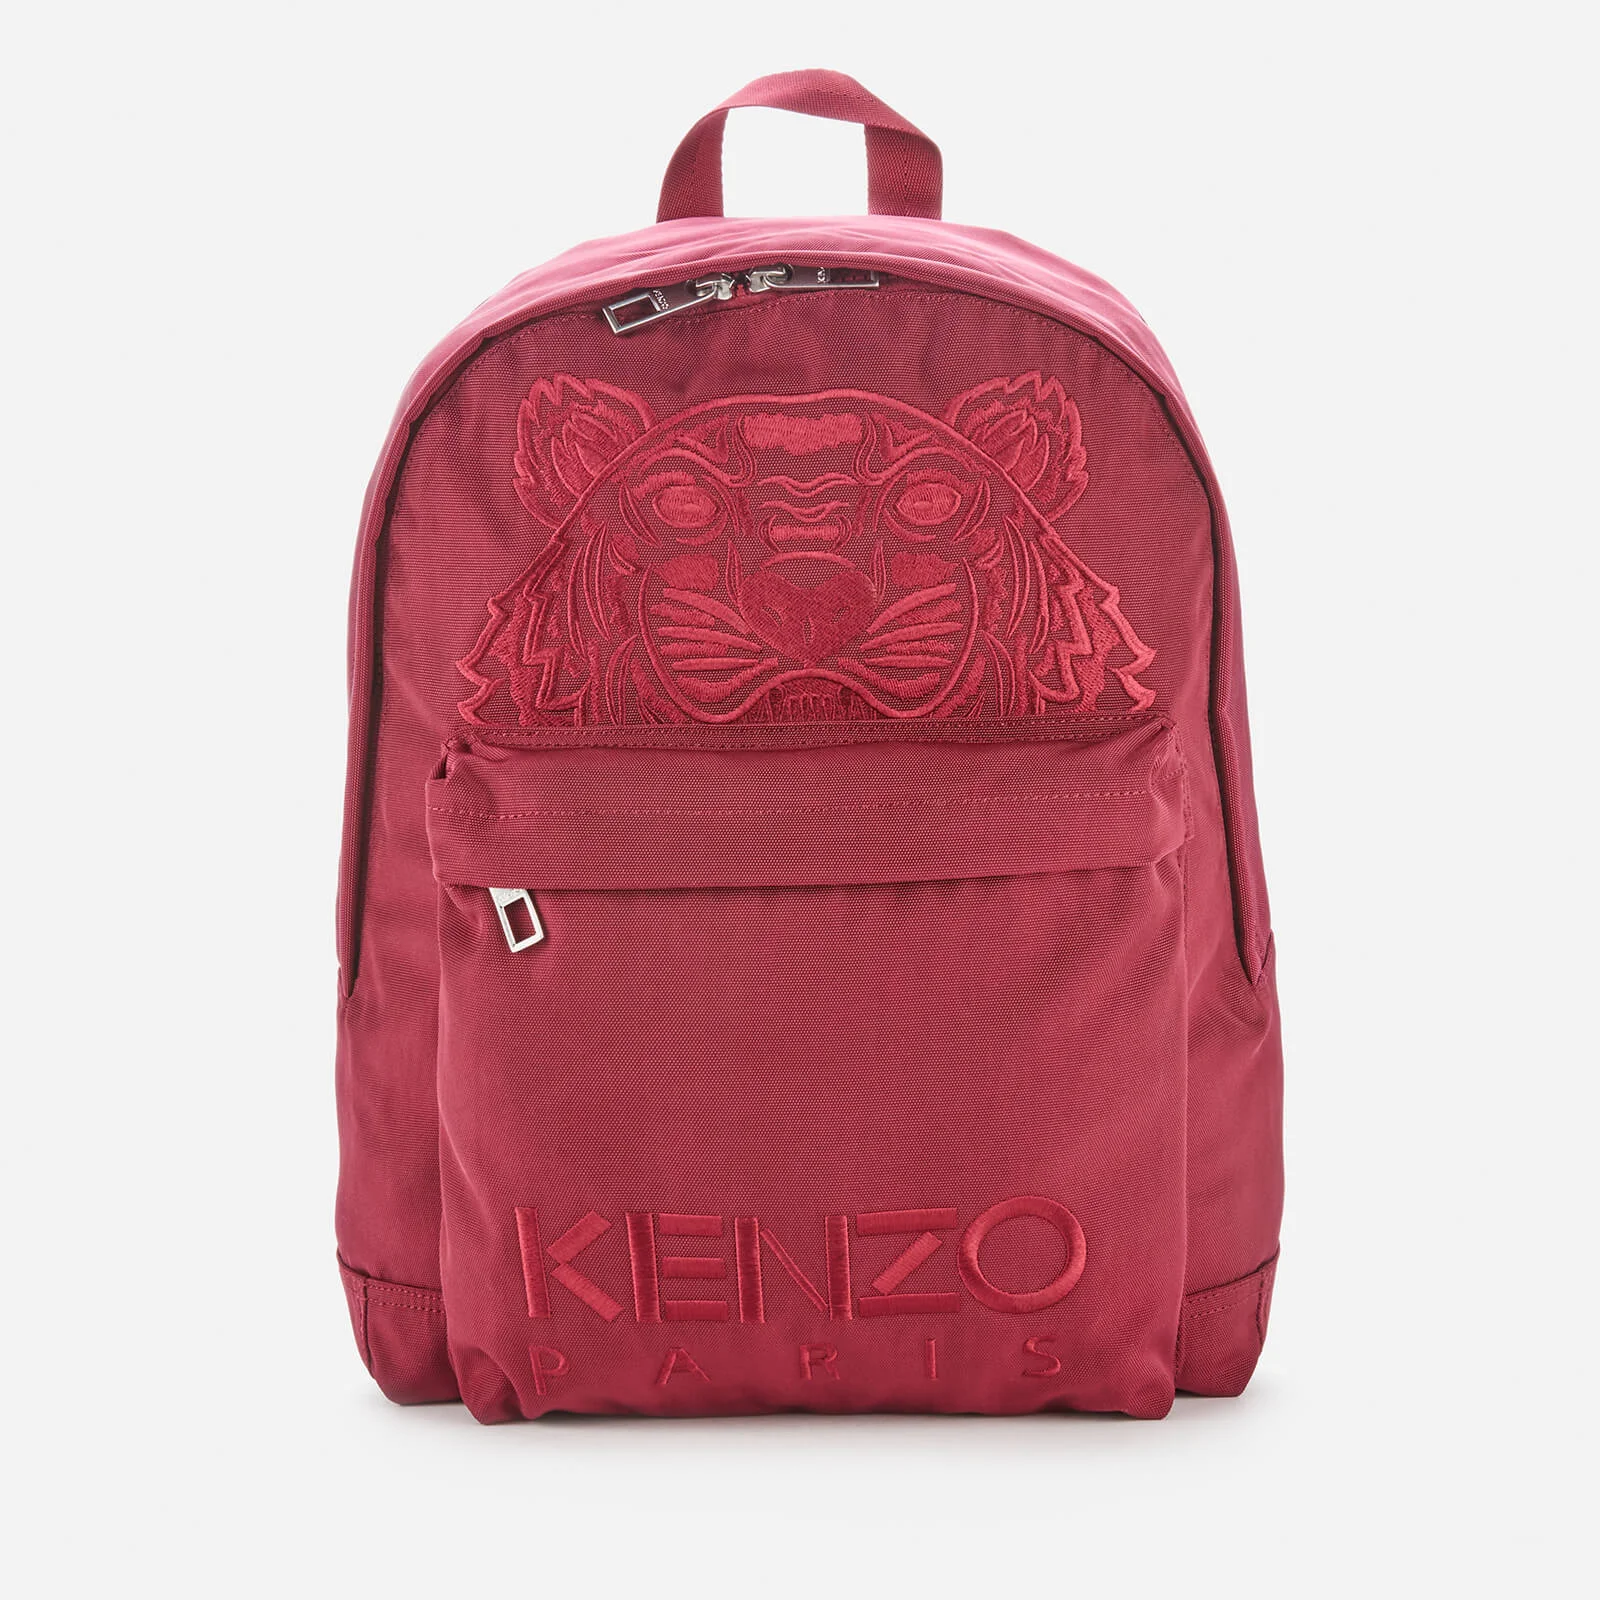 KENZO Men's Kampus Canvas Backpack - Magenta Image 1